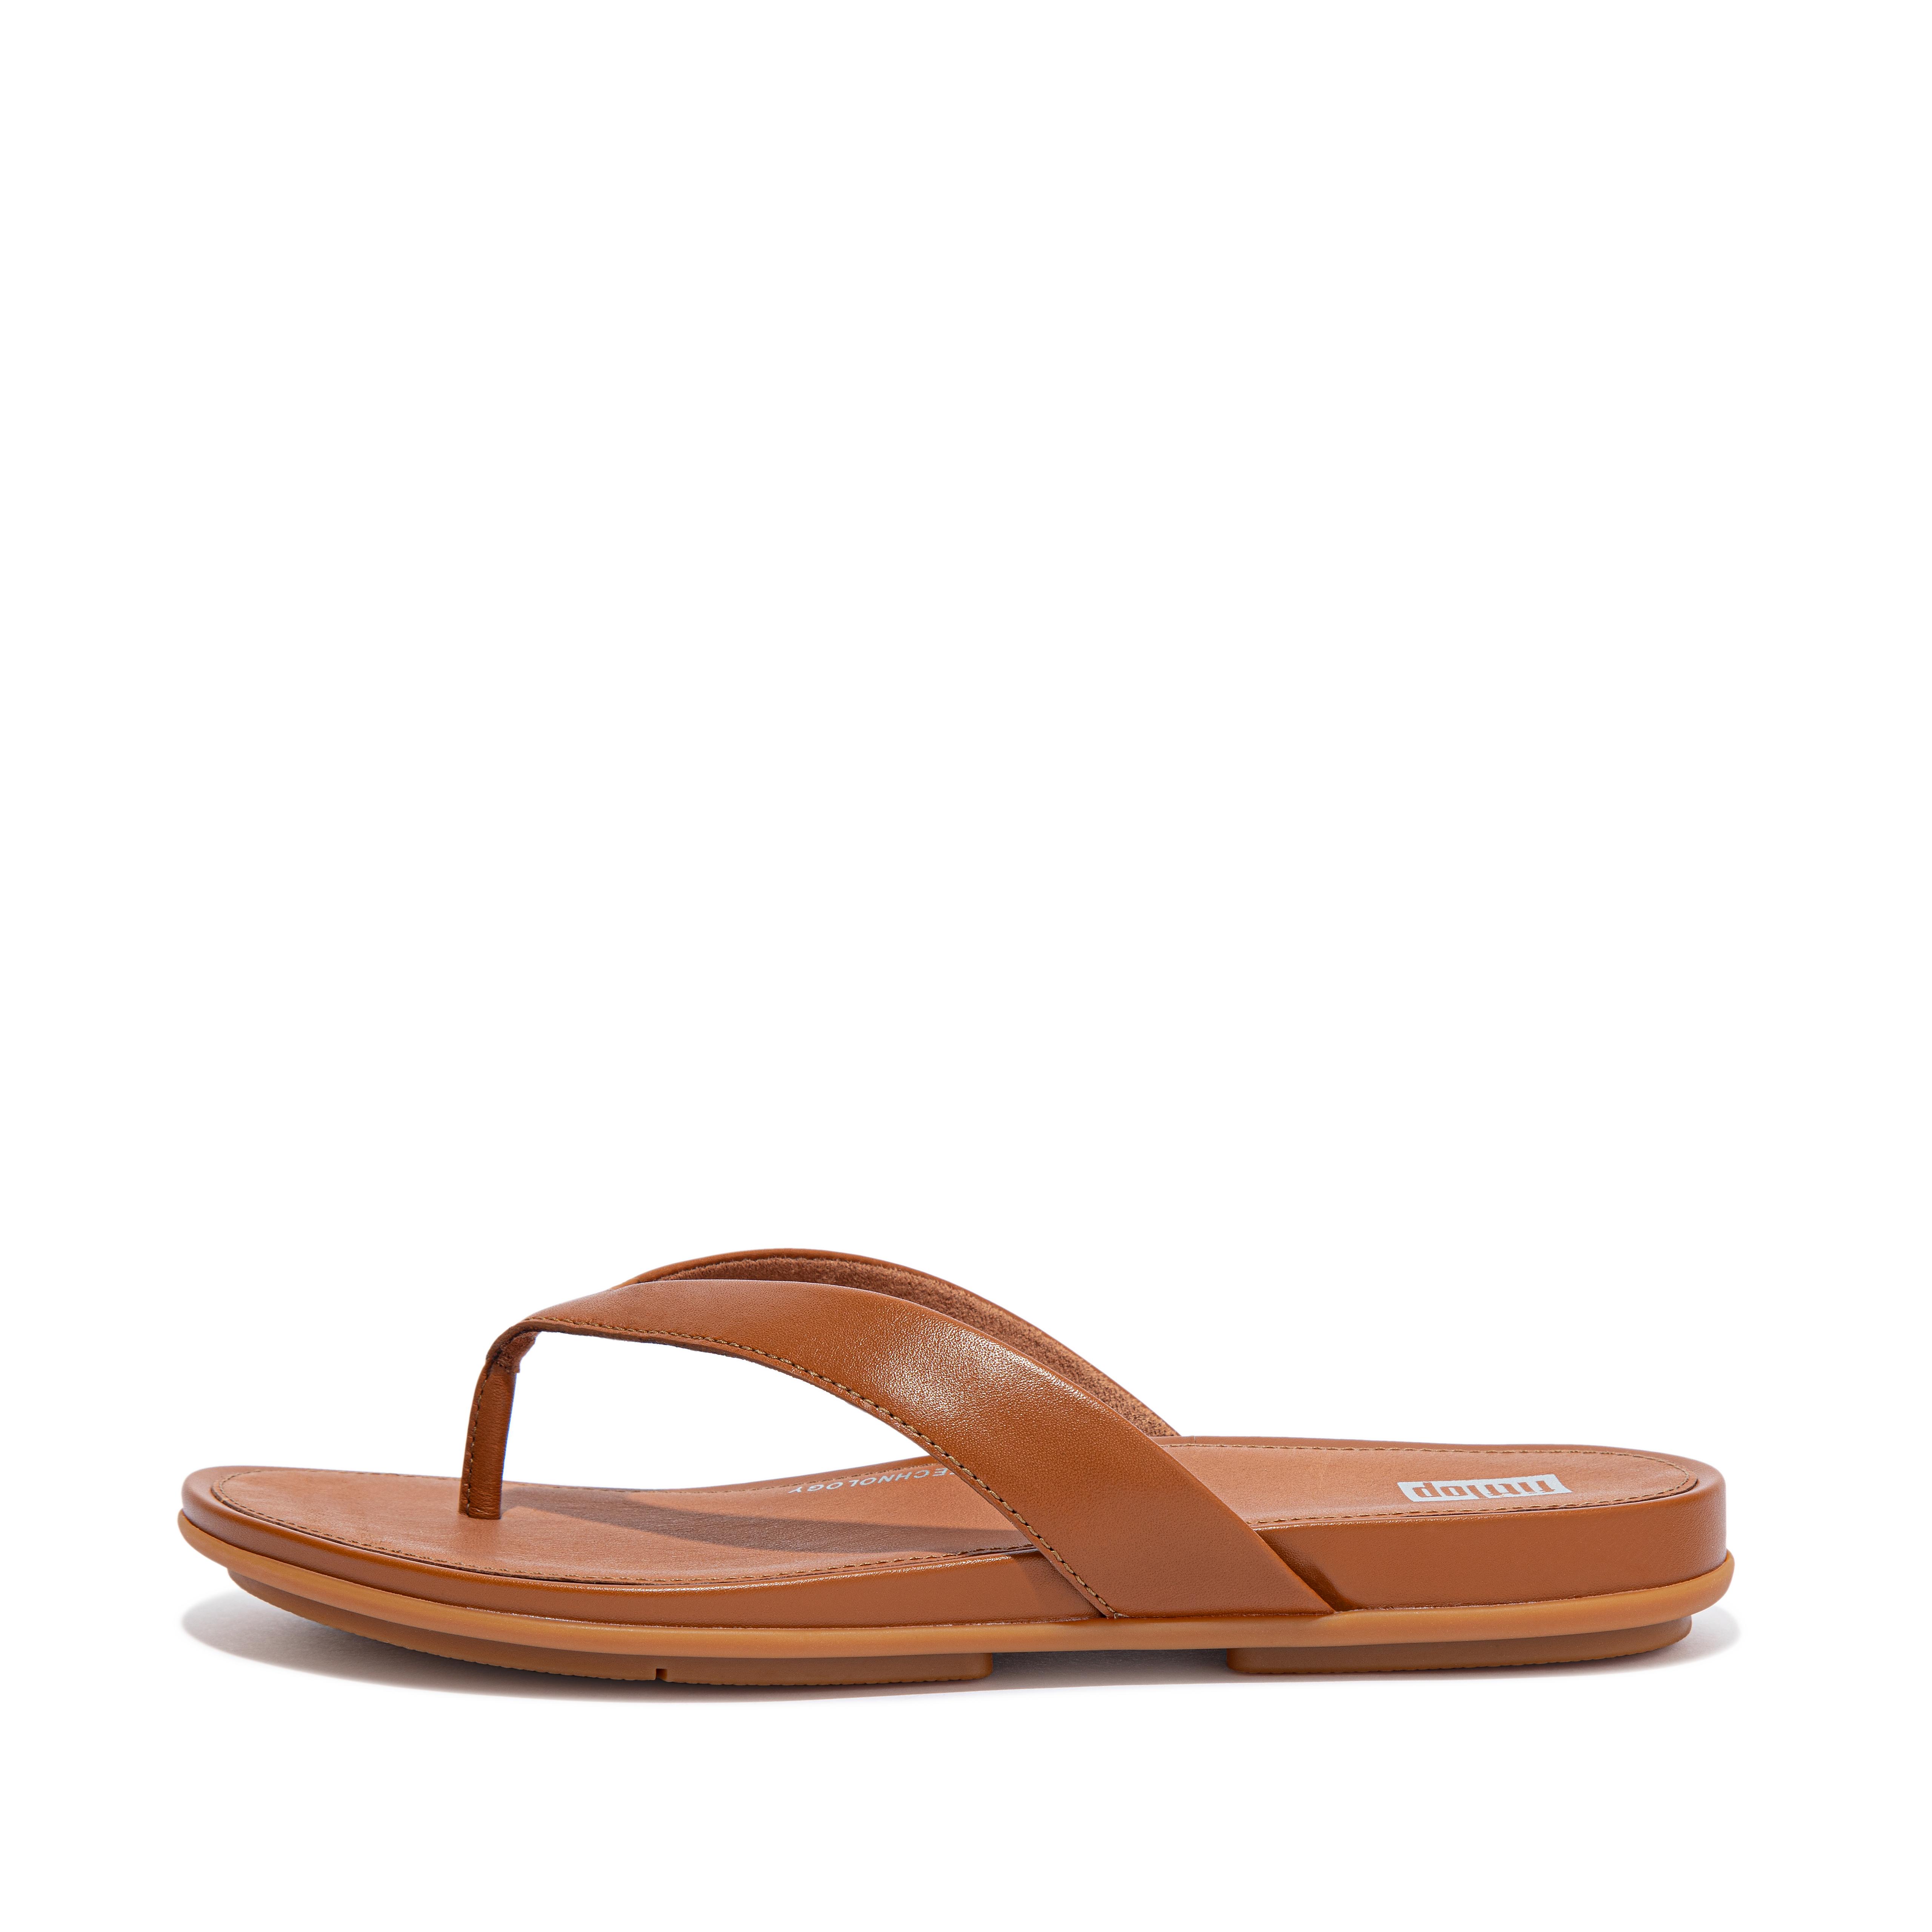 Fitflop Leather Flip-Flops,Light Tan